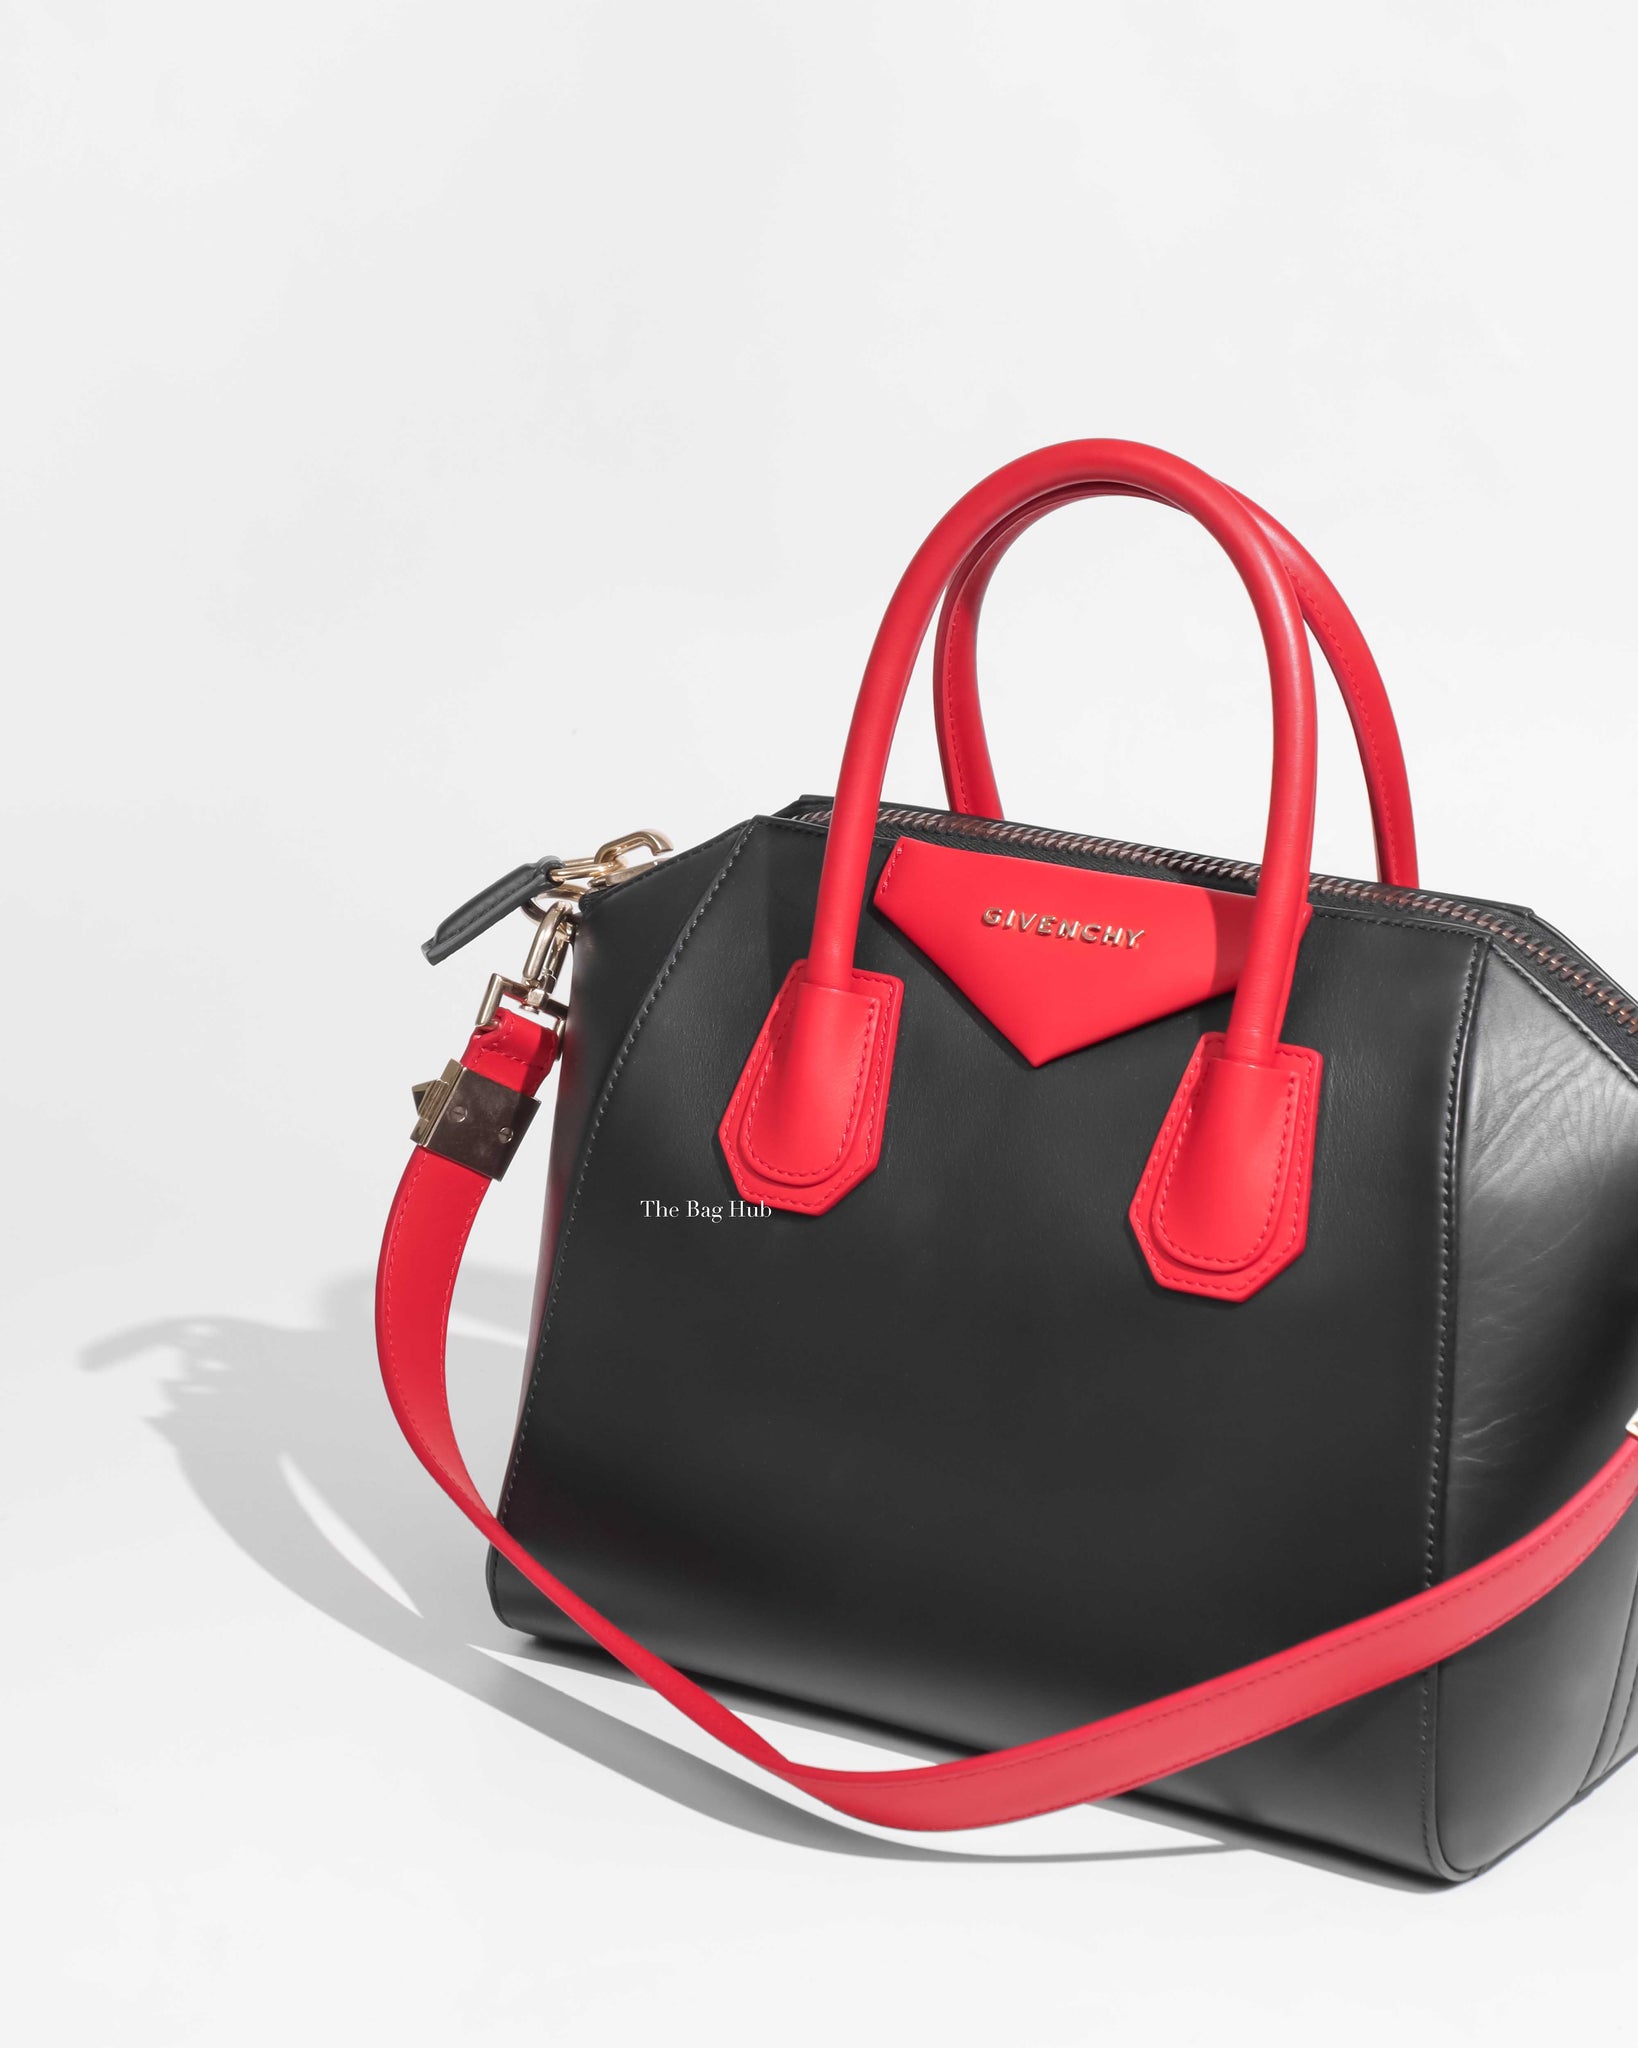 GIVENCHY small antigona | Givenchy bag, Favorite handbags, Luxury purses